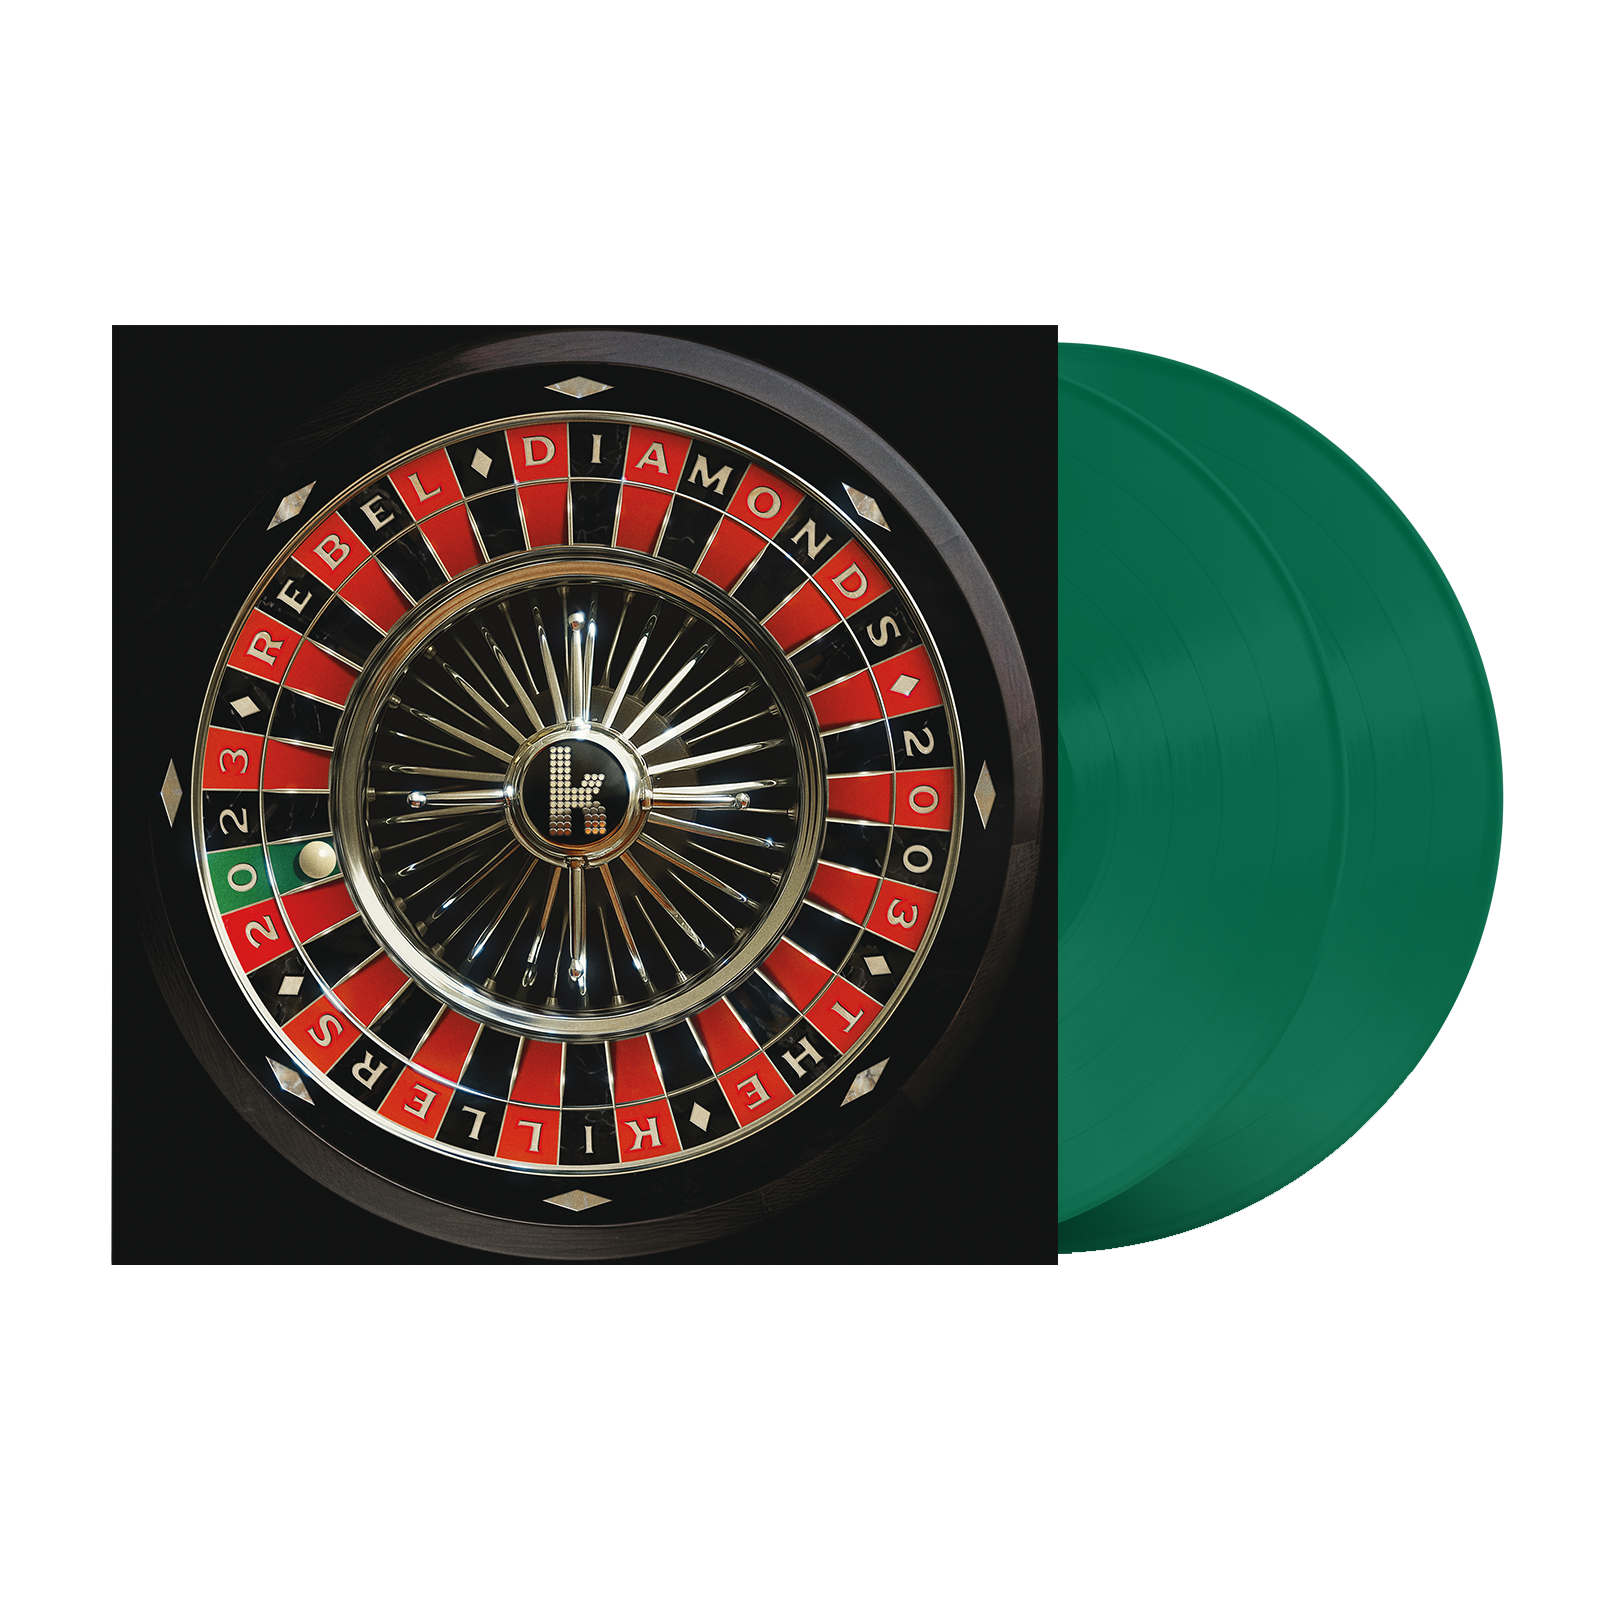 Rebel Diamonds: Limited Green Vinyl 2LP